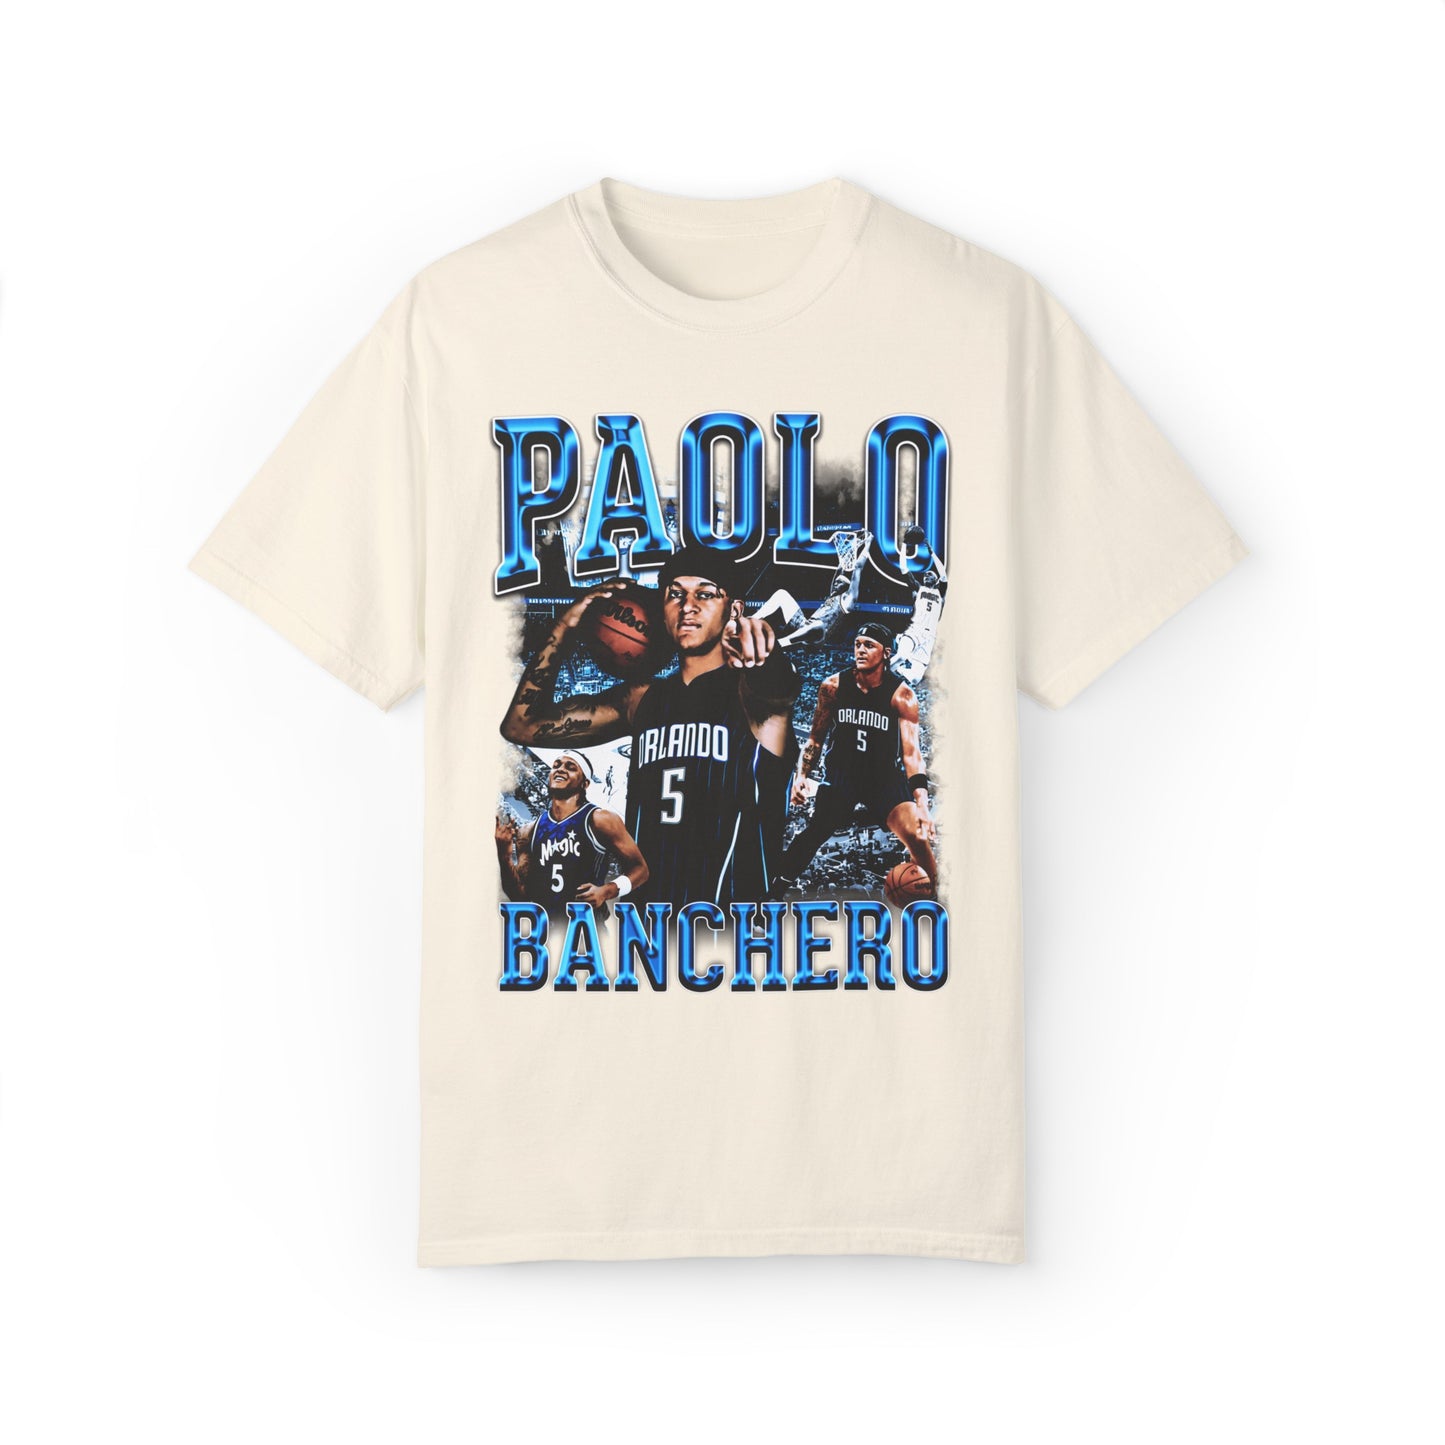 WIY x Banchero Vintage T-Shirt